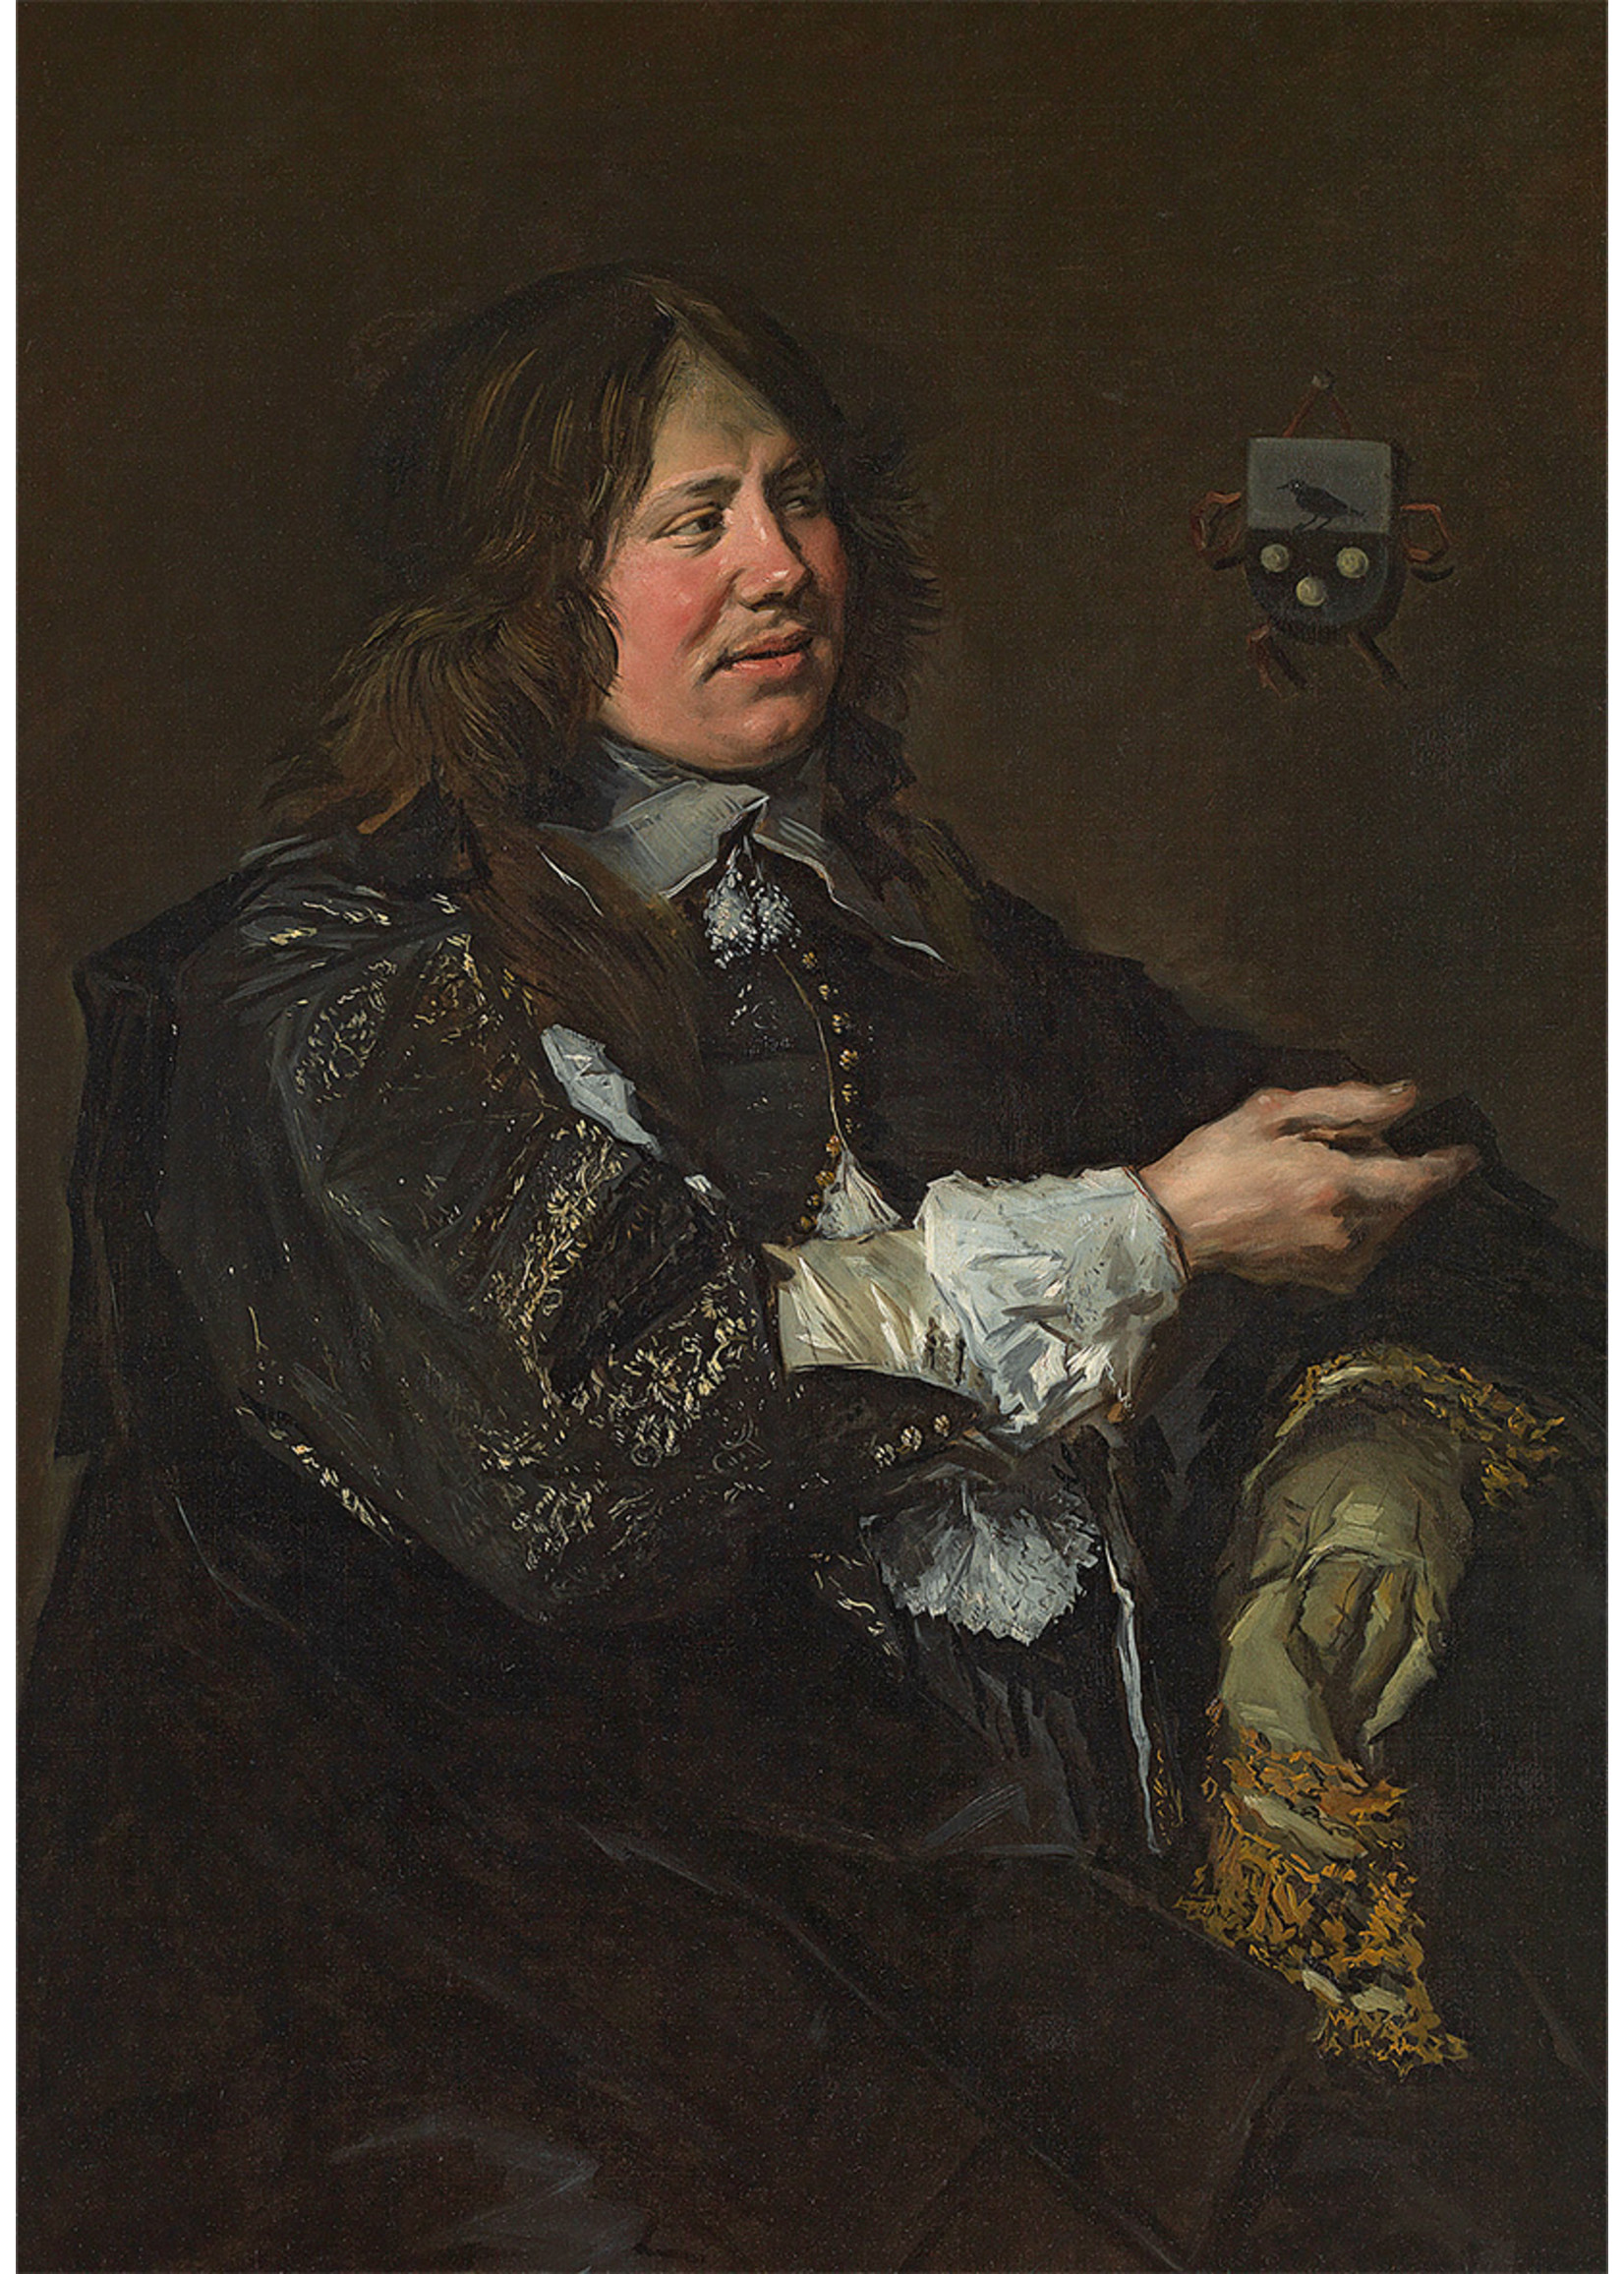 Prentkaart Frans Hals I Stephanus Geraerdts